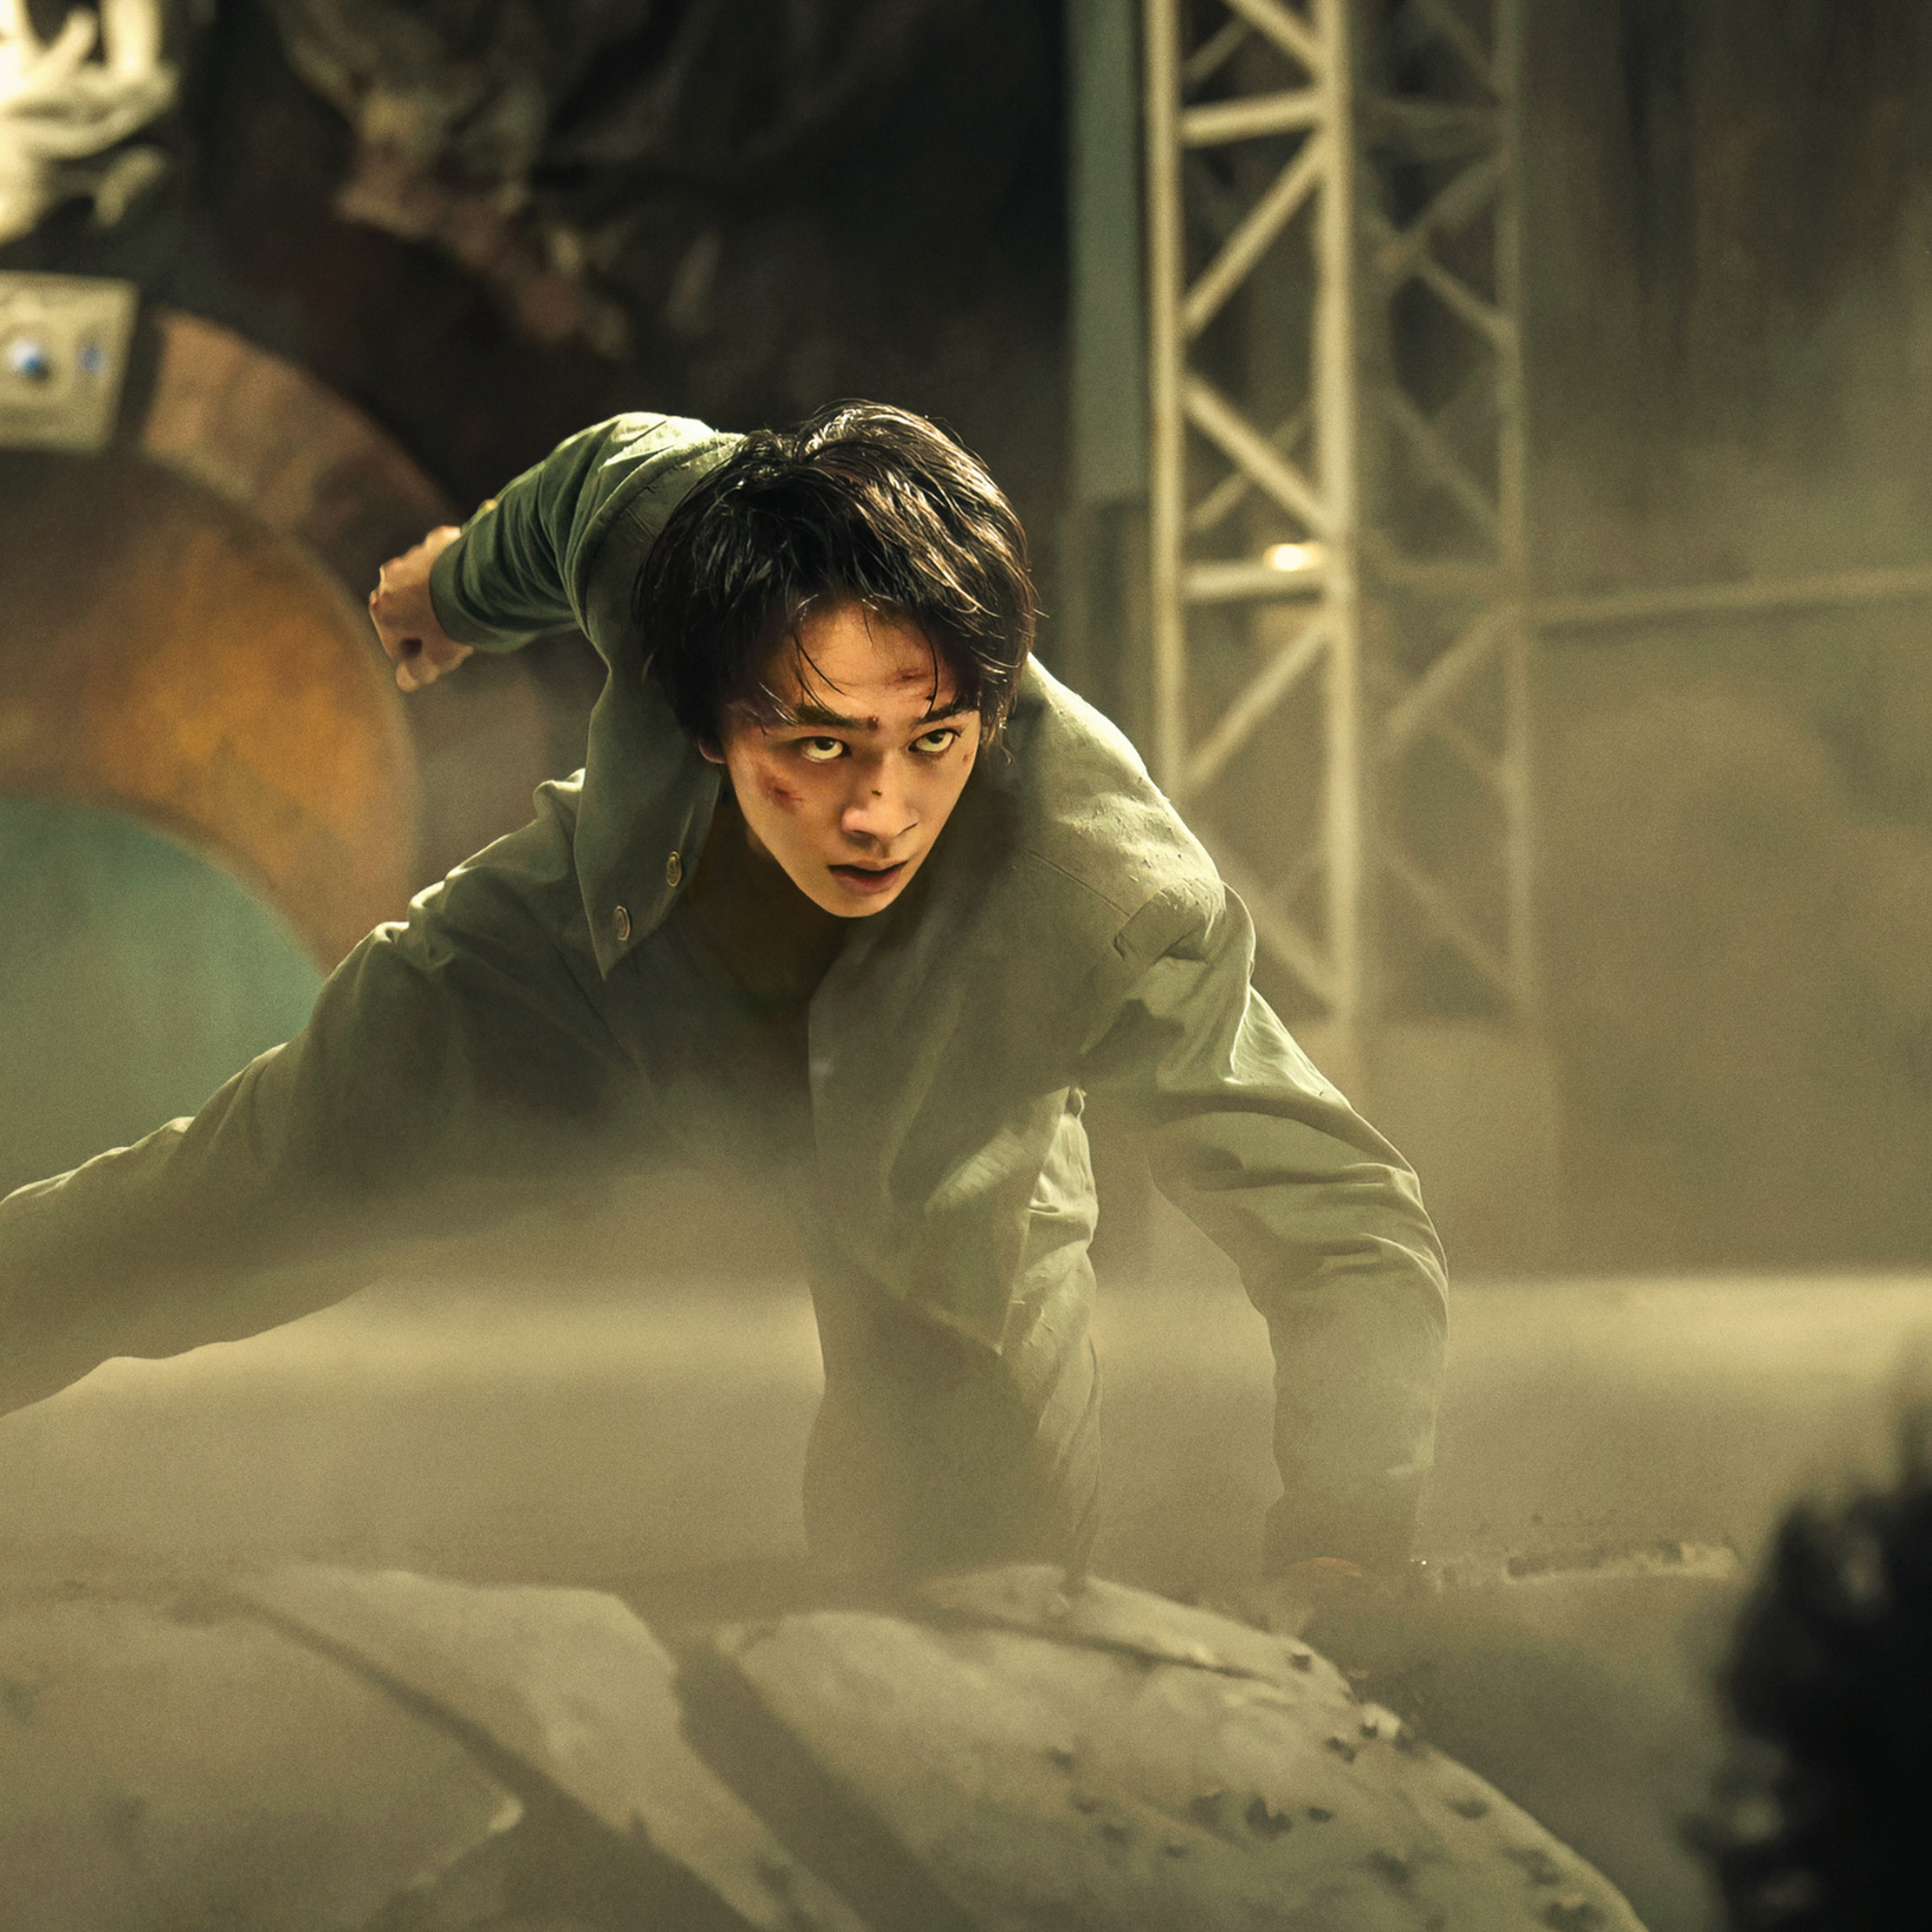 Production image from Netflix’s live-action Yu Yu Hakusho show featuring Takumi Kitamura as Yusuke Urameshi, a teenage boy in a green school uniform covered in blood as he kneels on the ground.